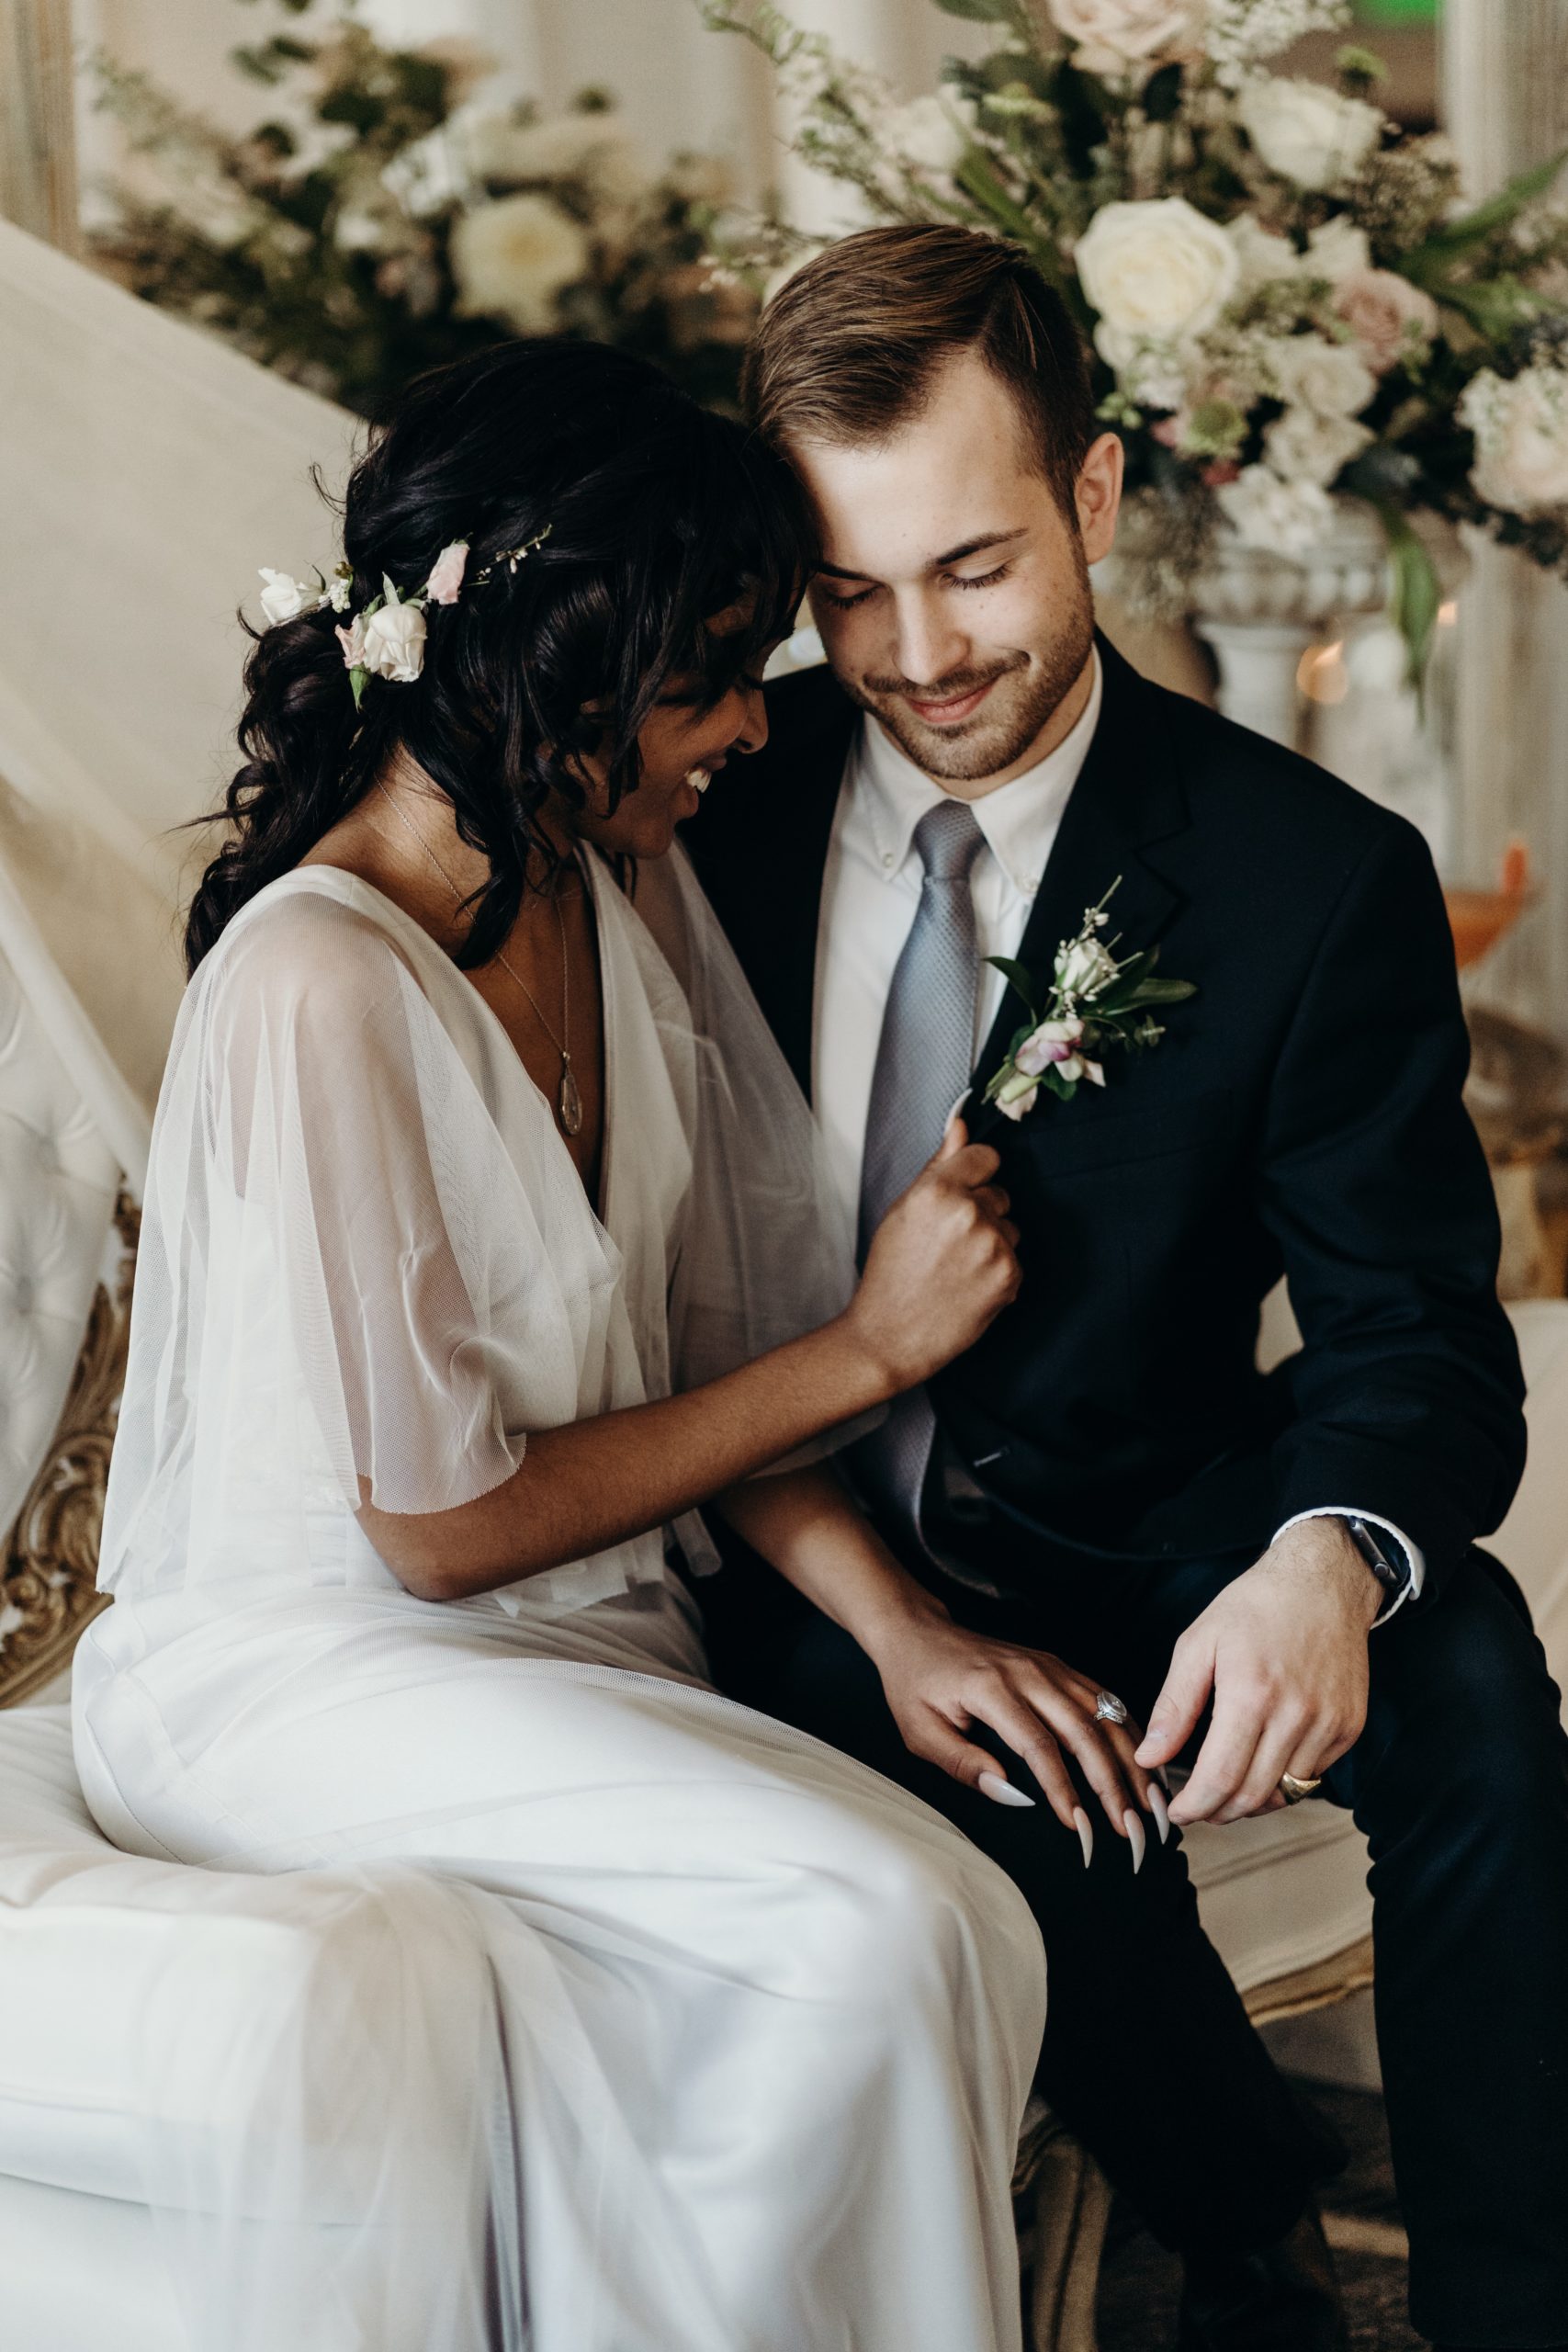 7 Unique Ways Wedding Photographers Can Reach Brides-to-Be Through Pinterest